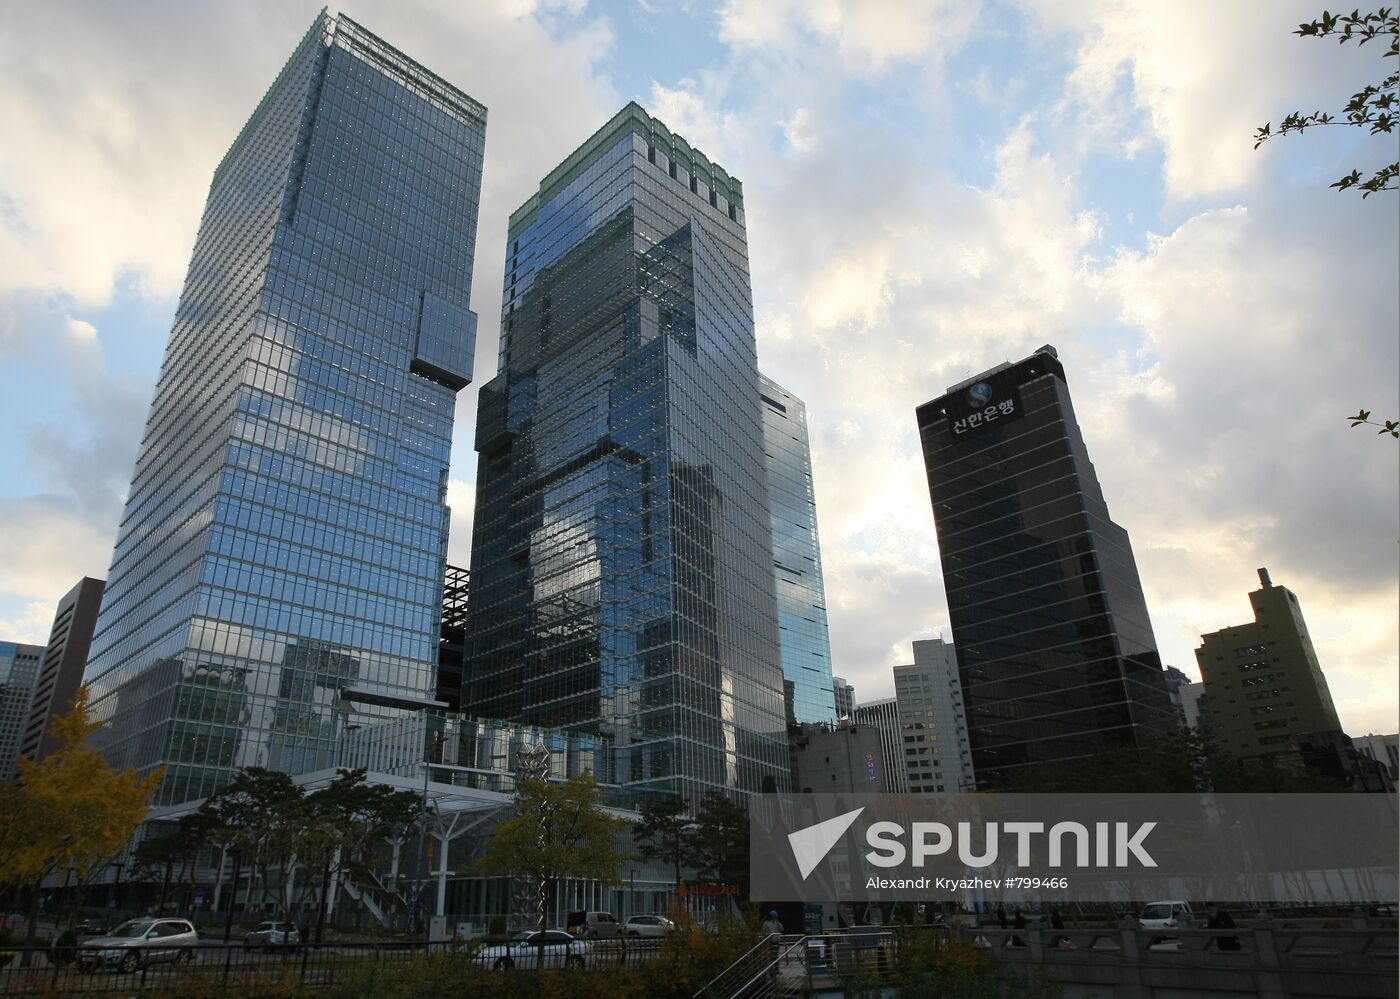 Views of Seoul